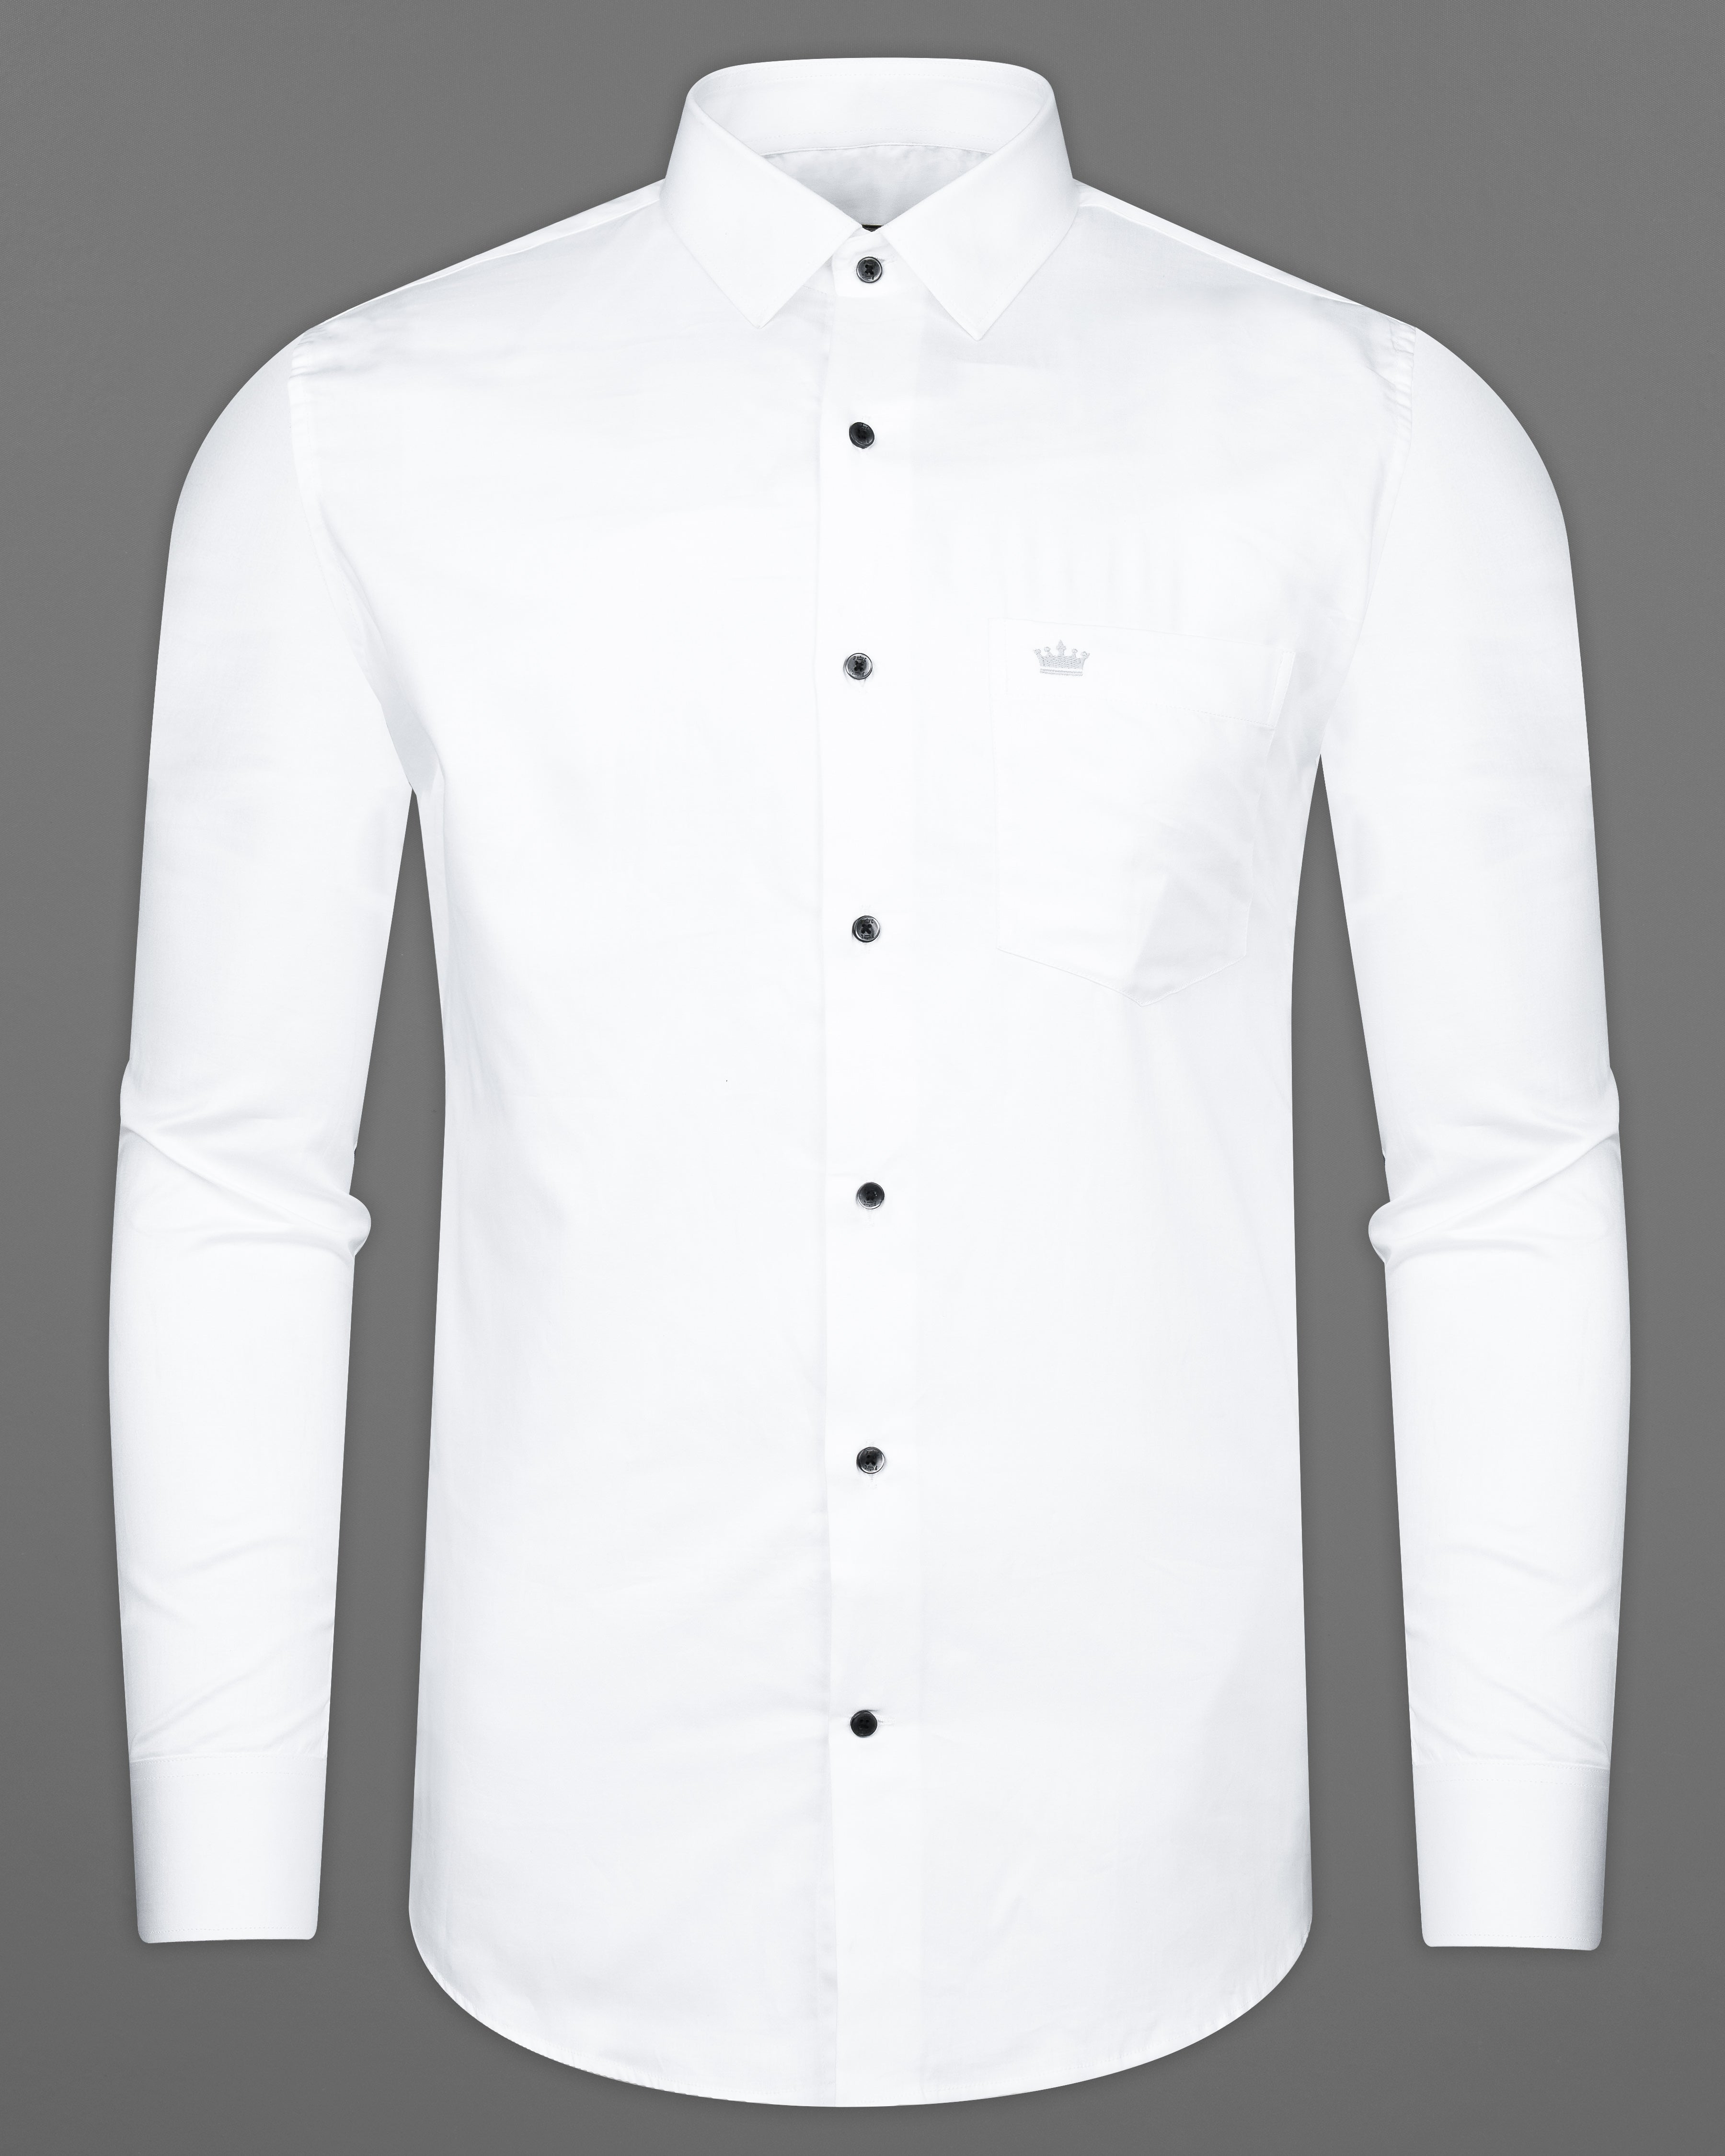 Bright White with Black Leather Elbow Patchwork Super Soft Premium Cotton Designer Shirt 9802-BLK-P129-38, 9802-BLK-P129-H-38, 9802-BLK-P129-39, 9802-BLK-P129-H-39, 9802-BLK-P129-40, 9802-BLK-P129-H-40, 9802-BLK-P129-42, 9802-BLK-P129-H-42, 9802-BLK-P129-44, 9802-BLK-P129-H-44, 9802-BLK-P129-46, 9802-BLK-P129-H-46, 9802-BLK-P129-48, 9802-BLK-P129-H-48, 9802-BLK-P129-50, 9802-BLK-P129-H-50, 9802-BLK-P129-52, 9802-BLK-P129-H-52